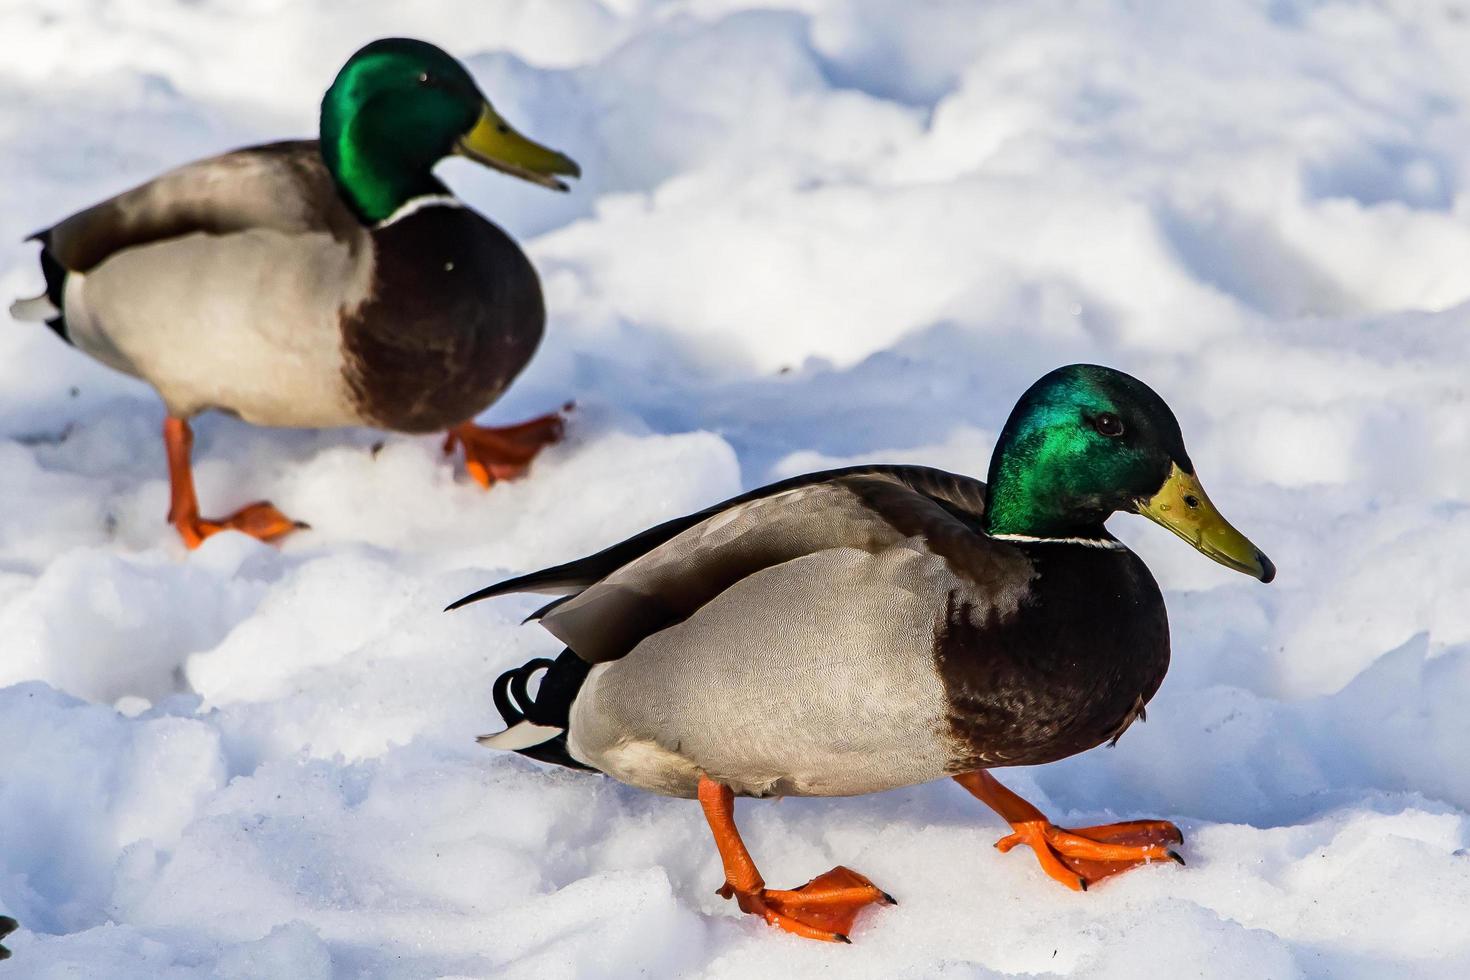 Wild ducks in winter photo